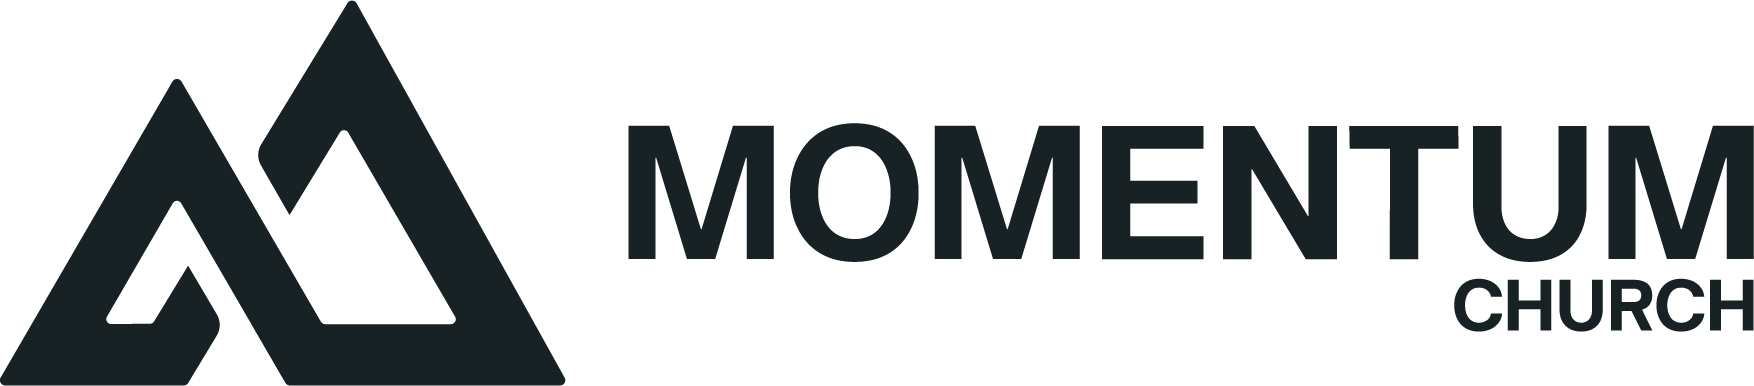 Main Logo Momentum Church Wordmark 01